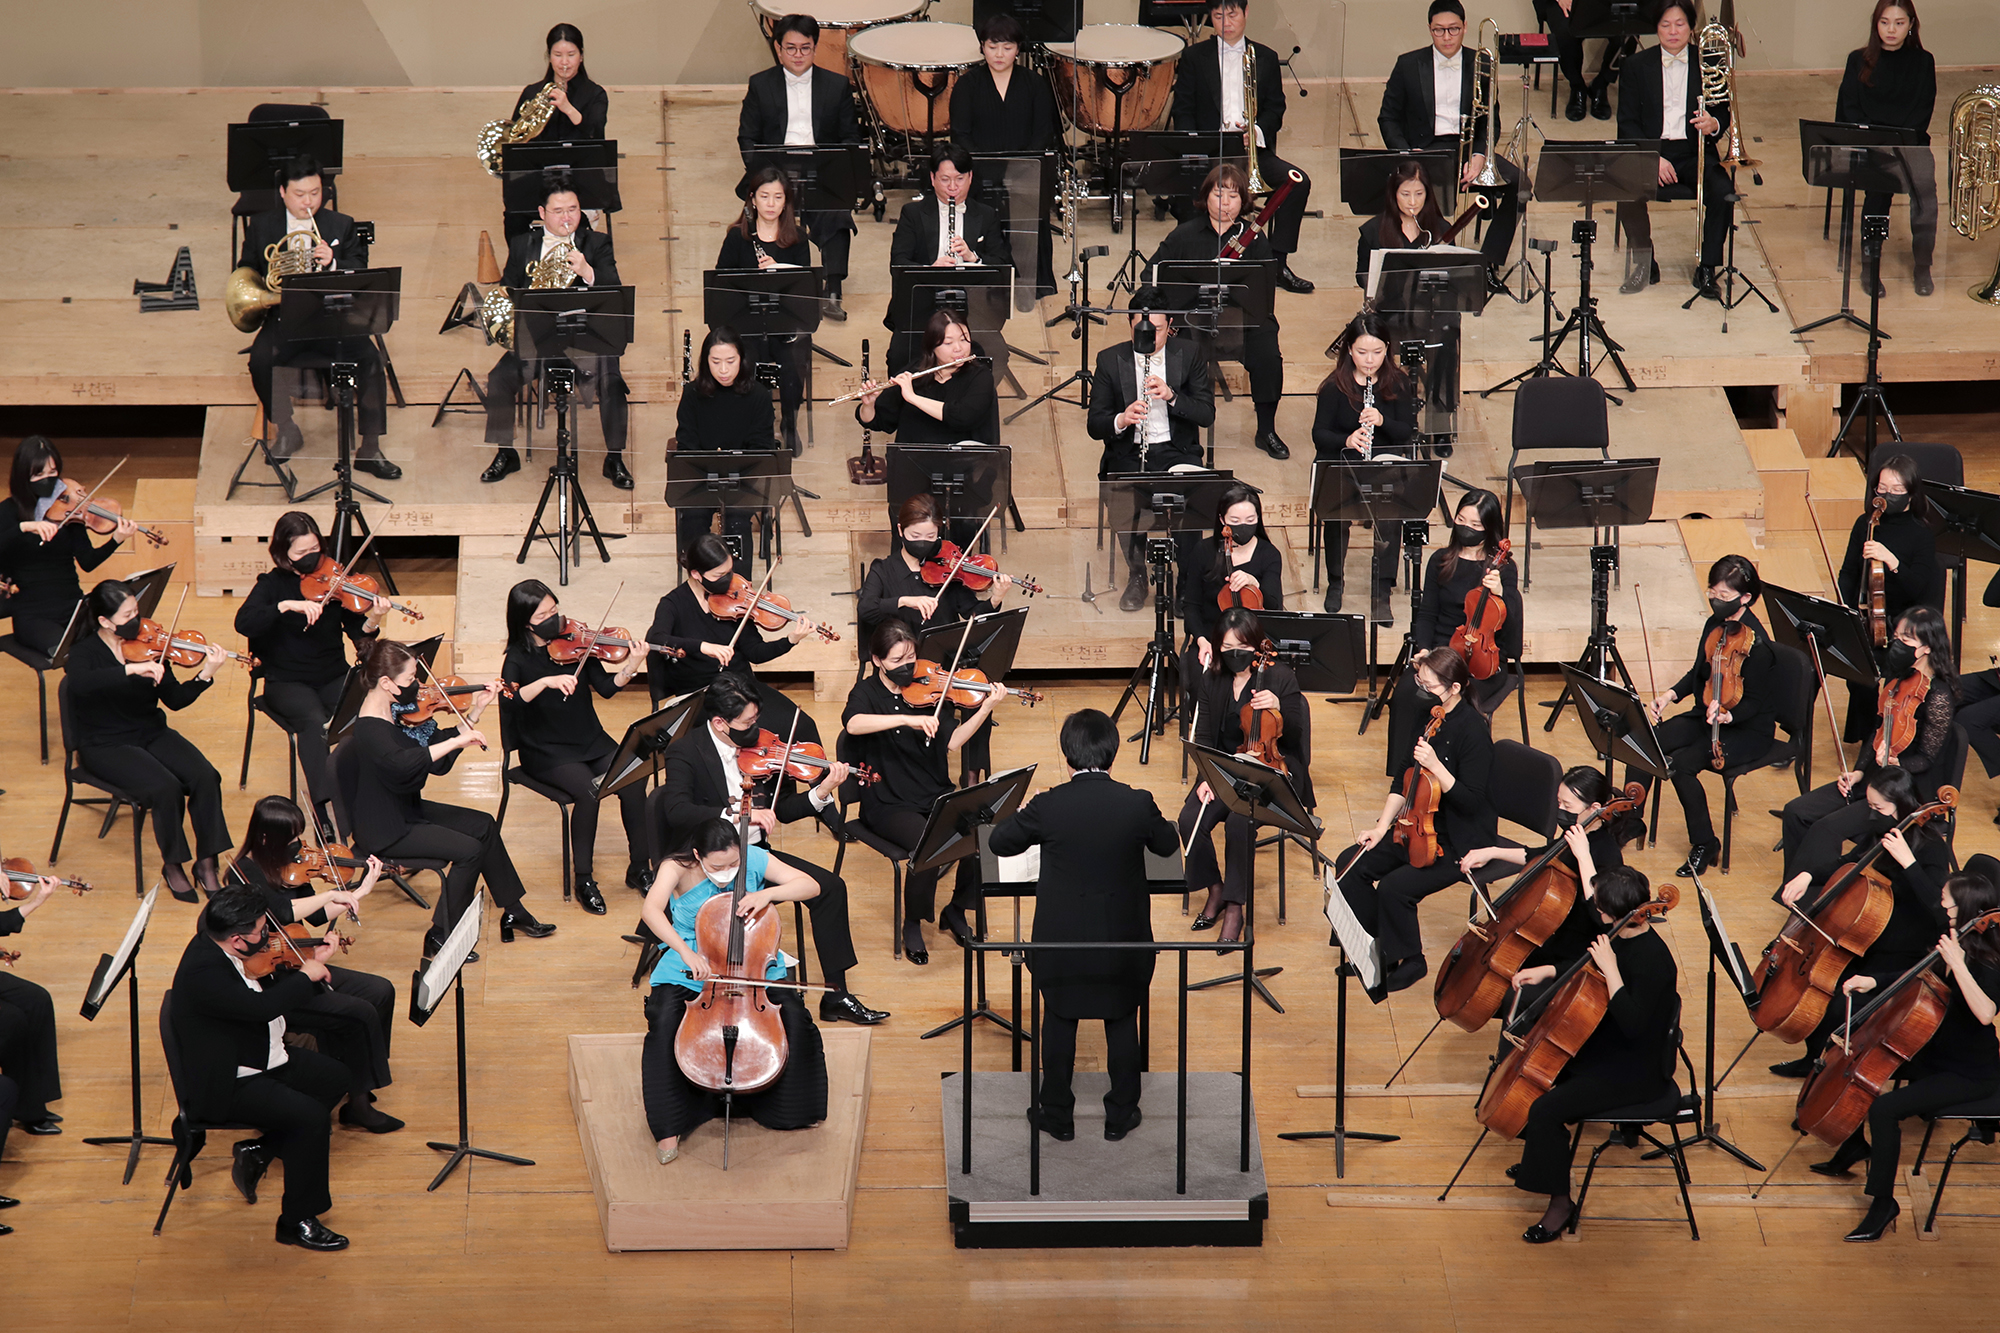 Bucheon Philharmonic Orchestra 286th Subscription Concert - Best Classic Series 'Bohemian'